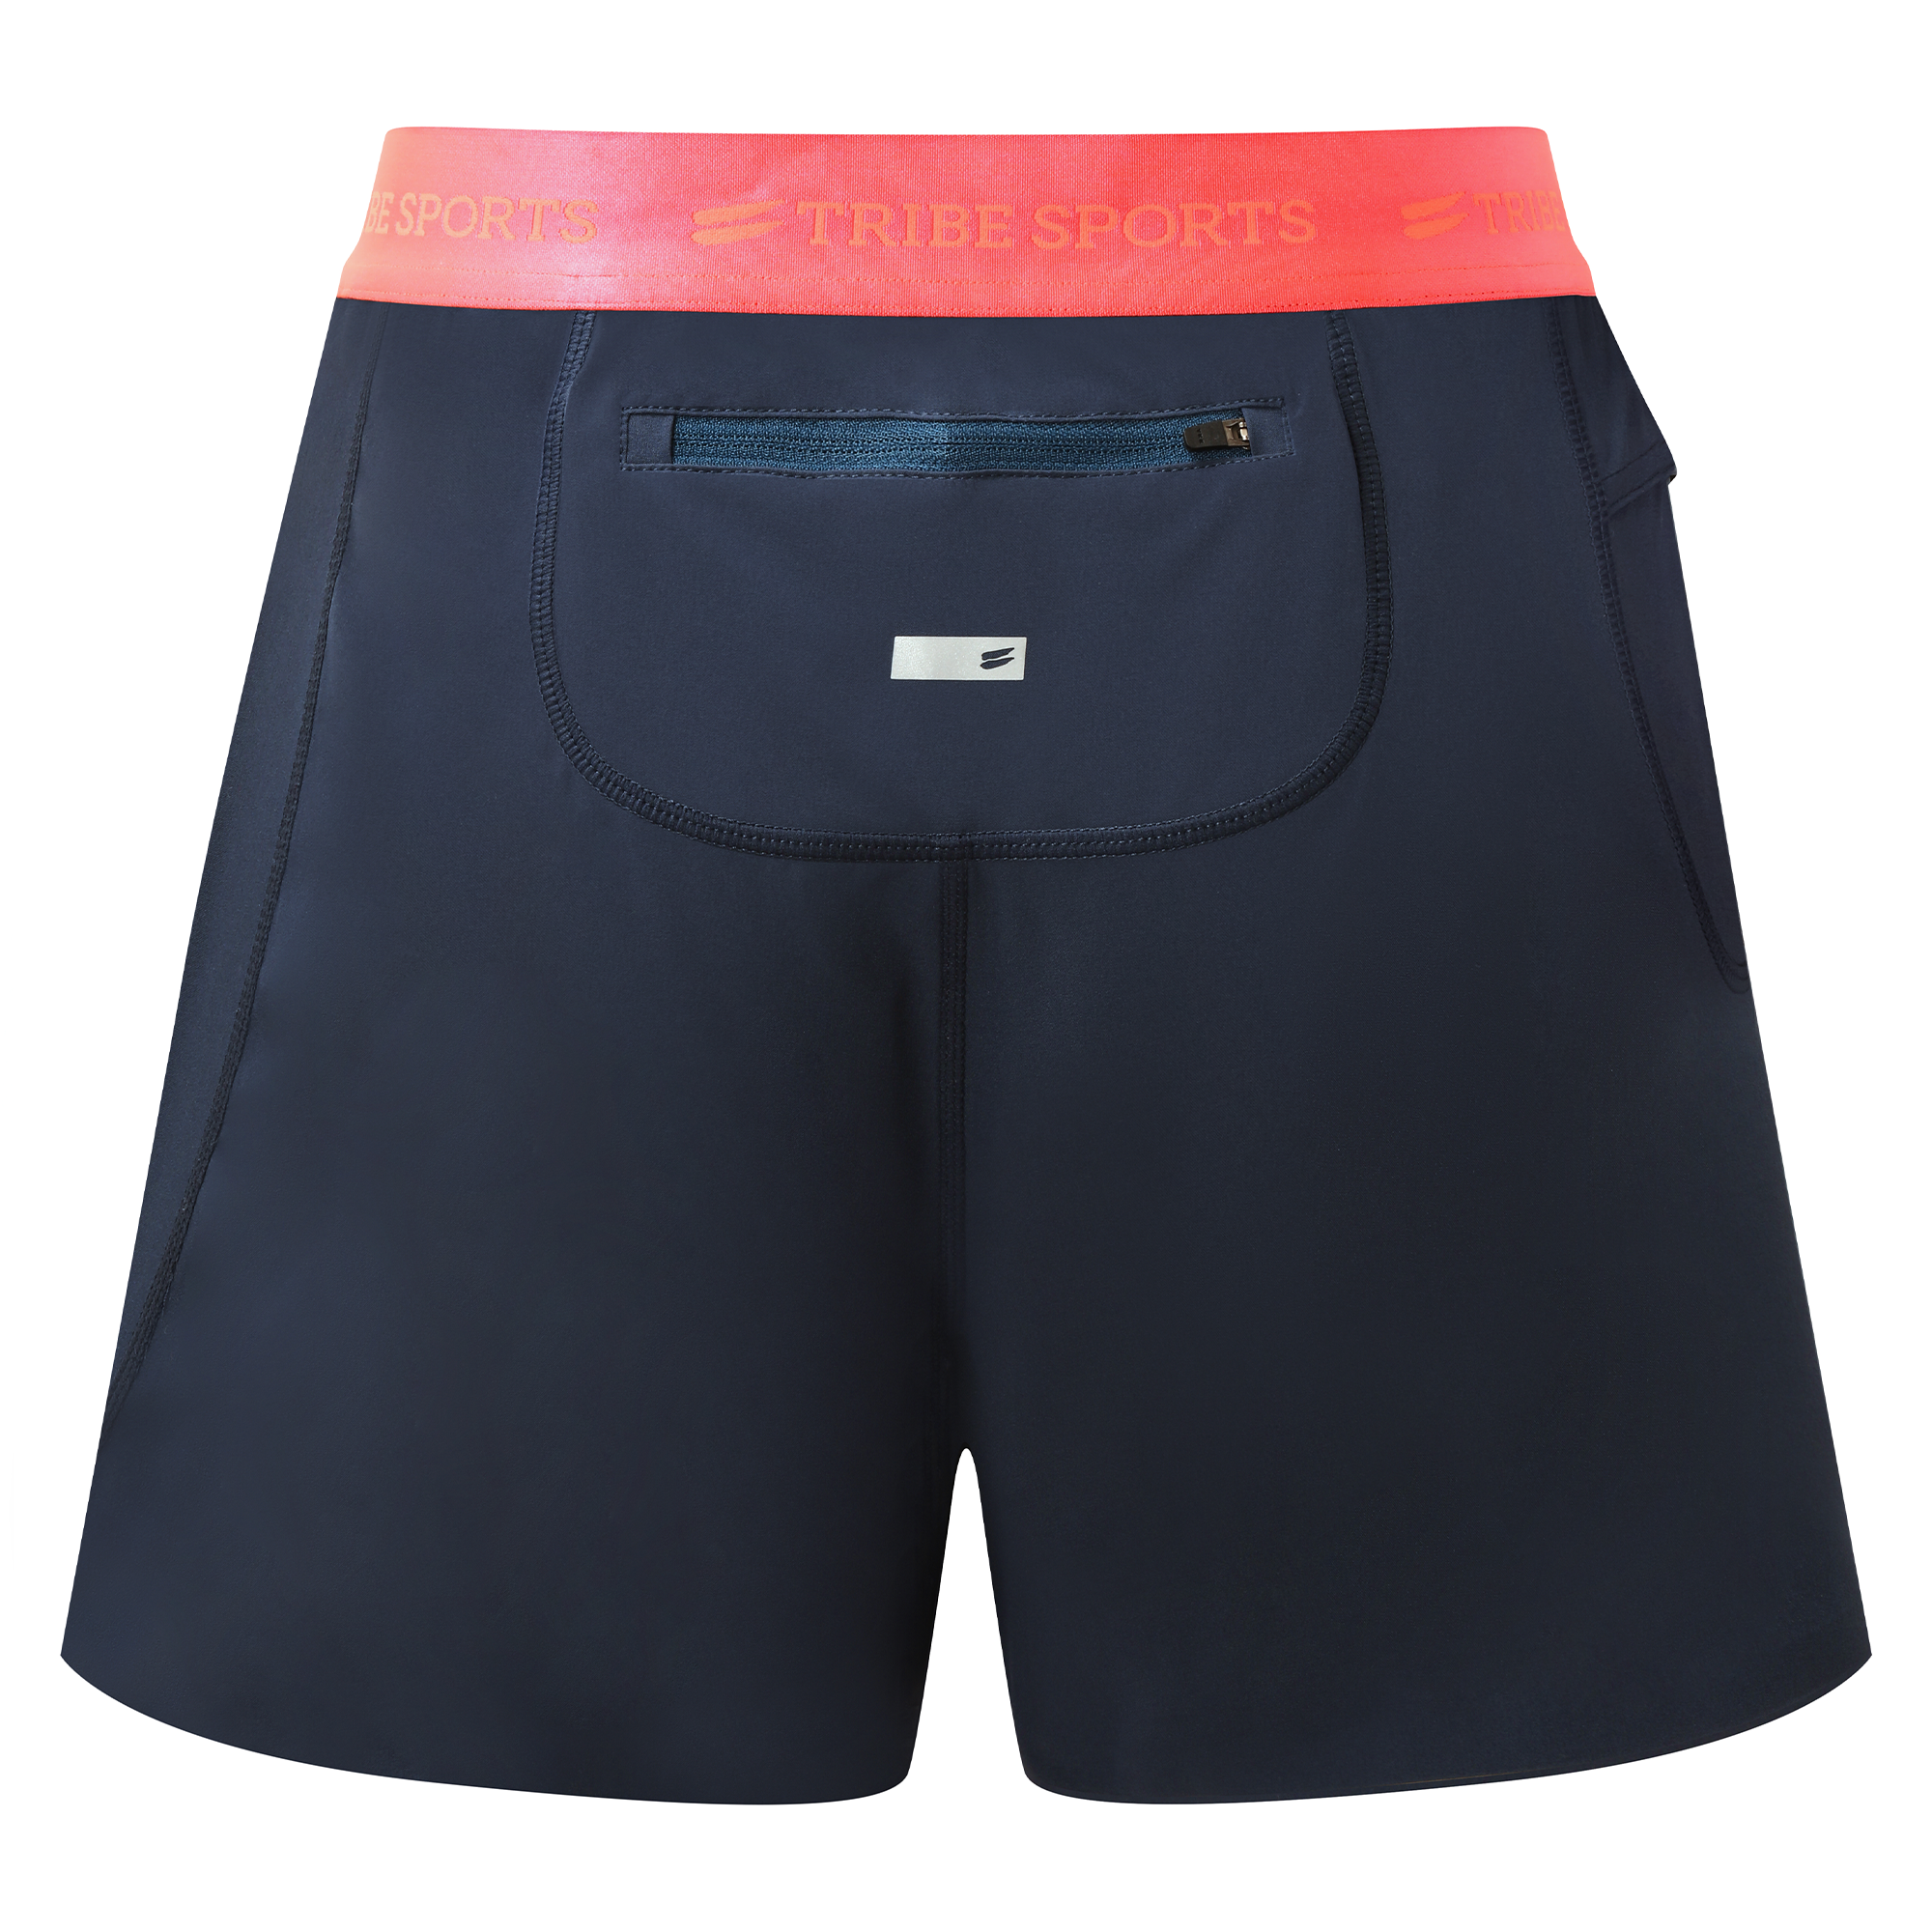 Endure Swift Shorts - Navy/Charcoal - Tribe Sports